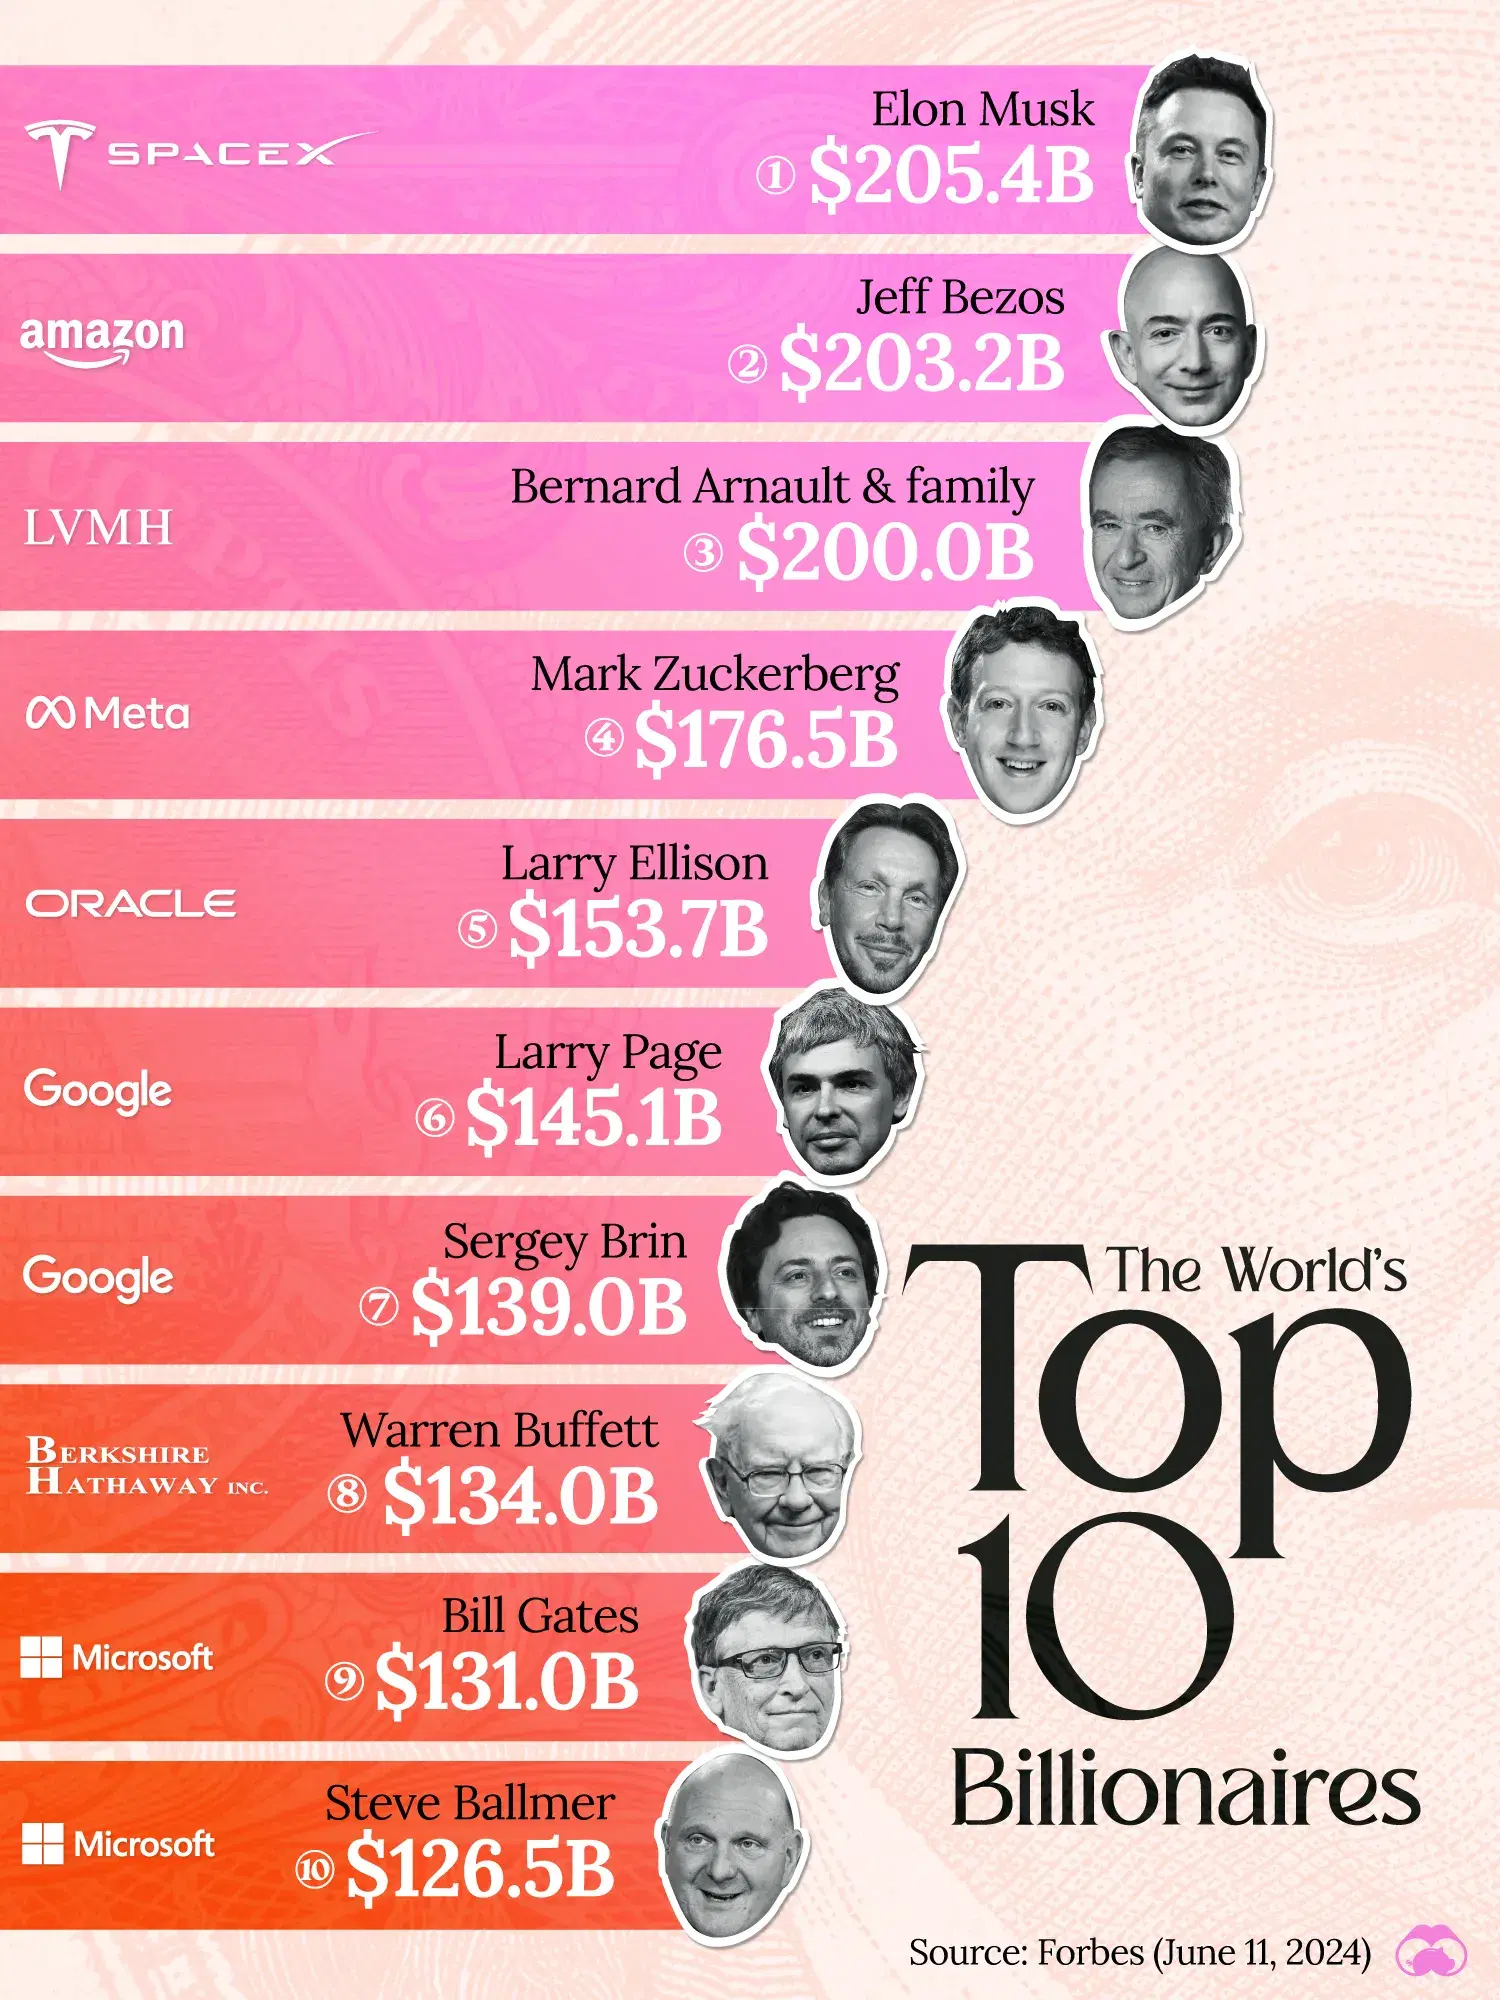 Elon Musk and Jeff Bezos Surpass Bernard Arnault on the Billionaires List